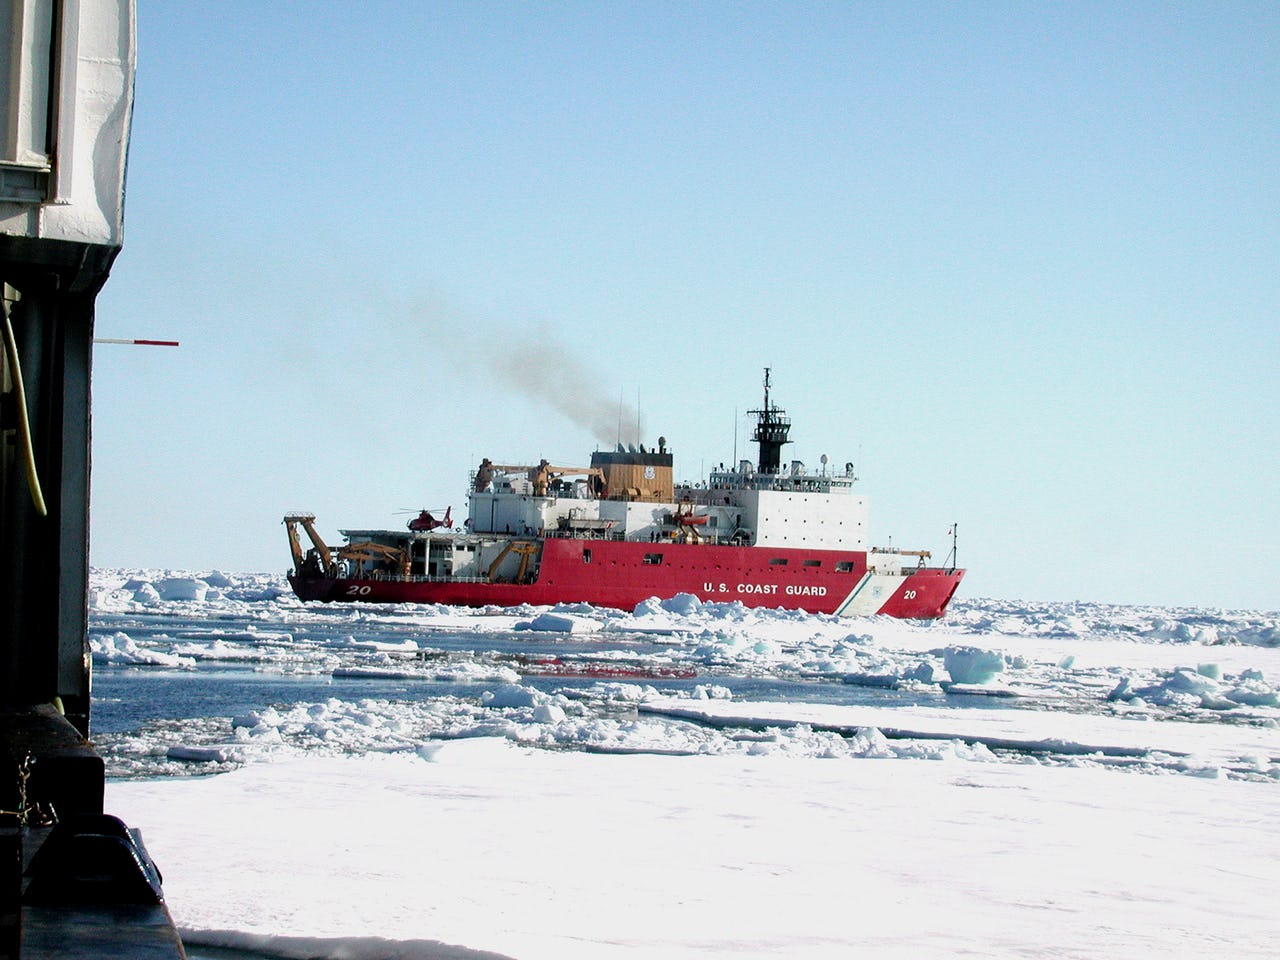 U.S. coast guard vessel navigating through ice